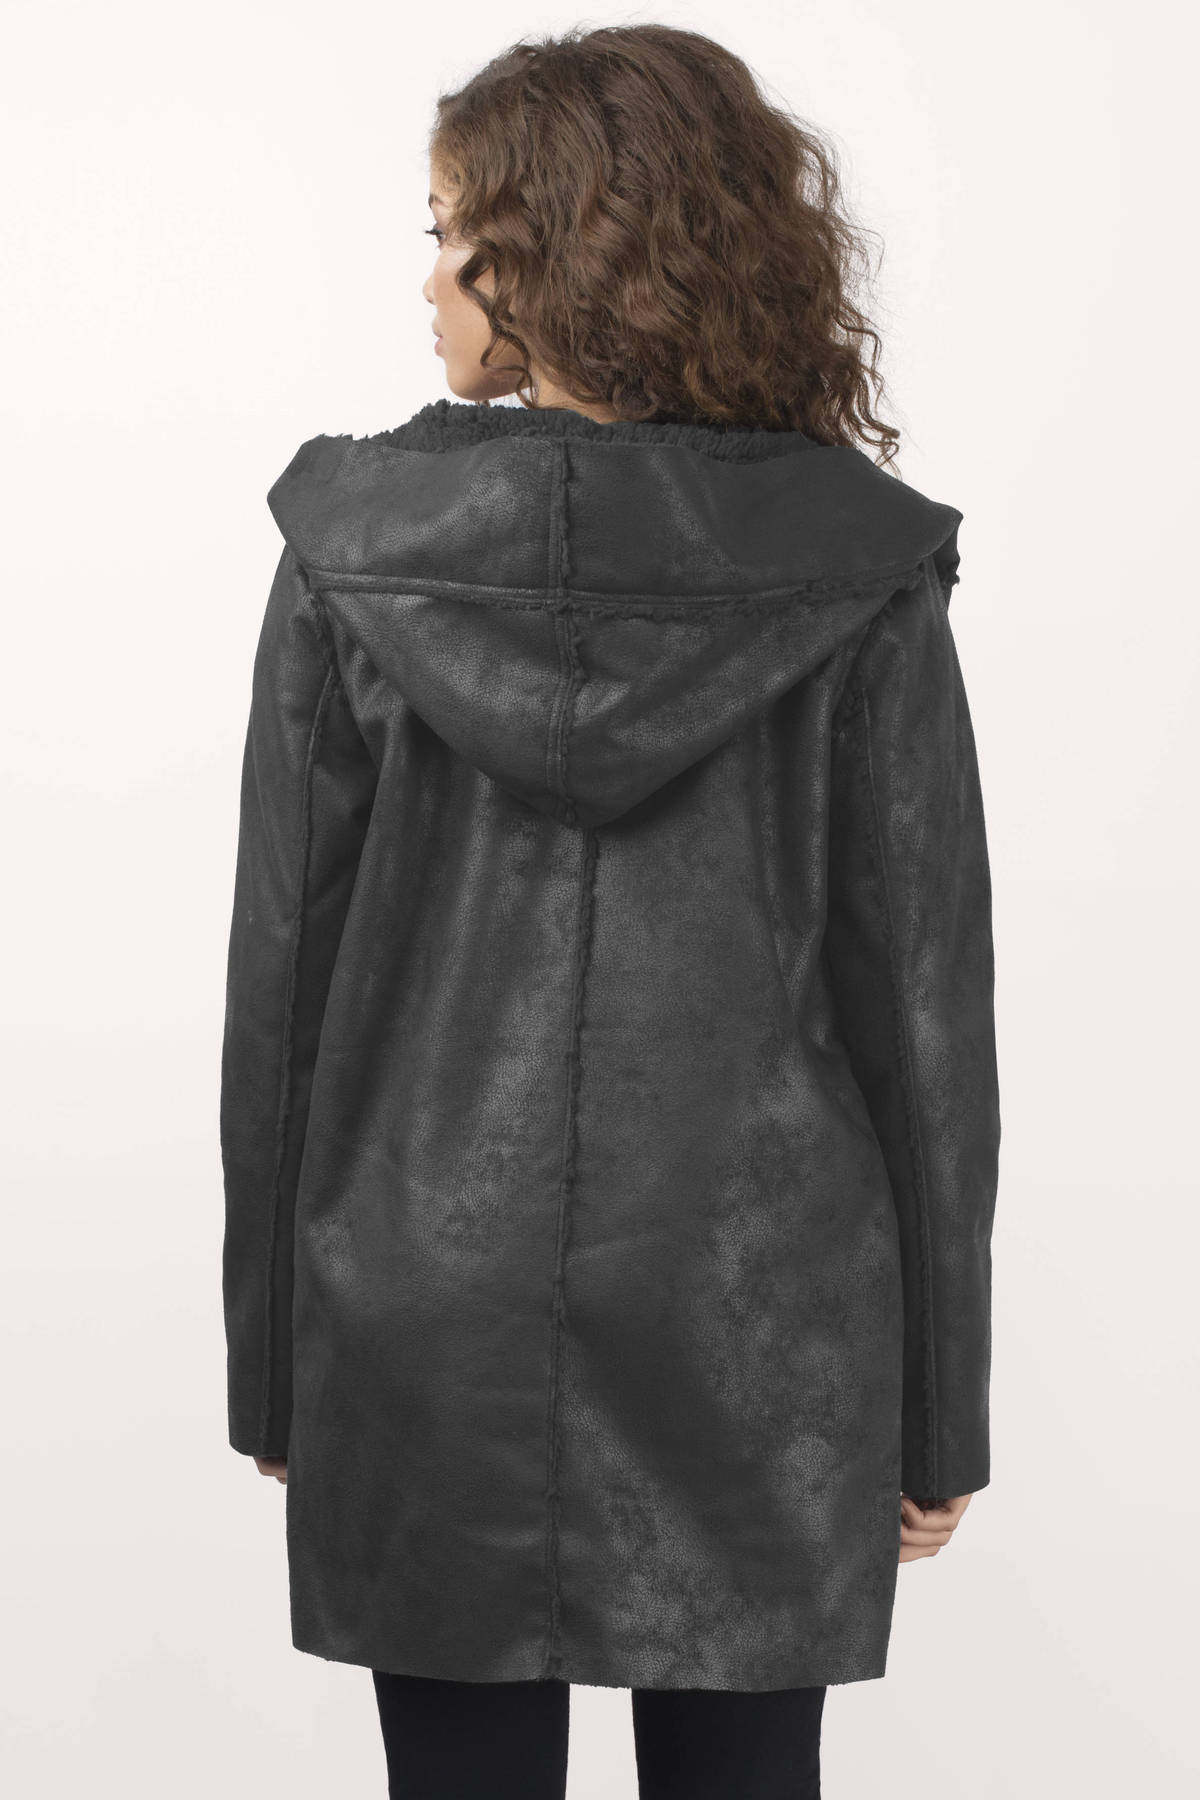 Coats For Women | Trench Coats, Jackets, Winter Coats | Tobi